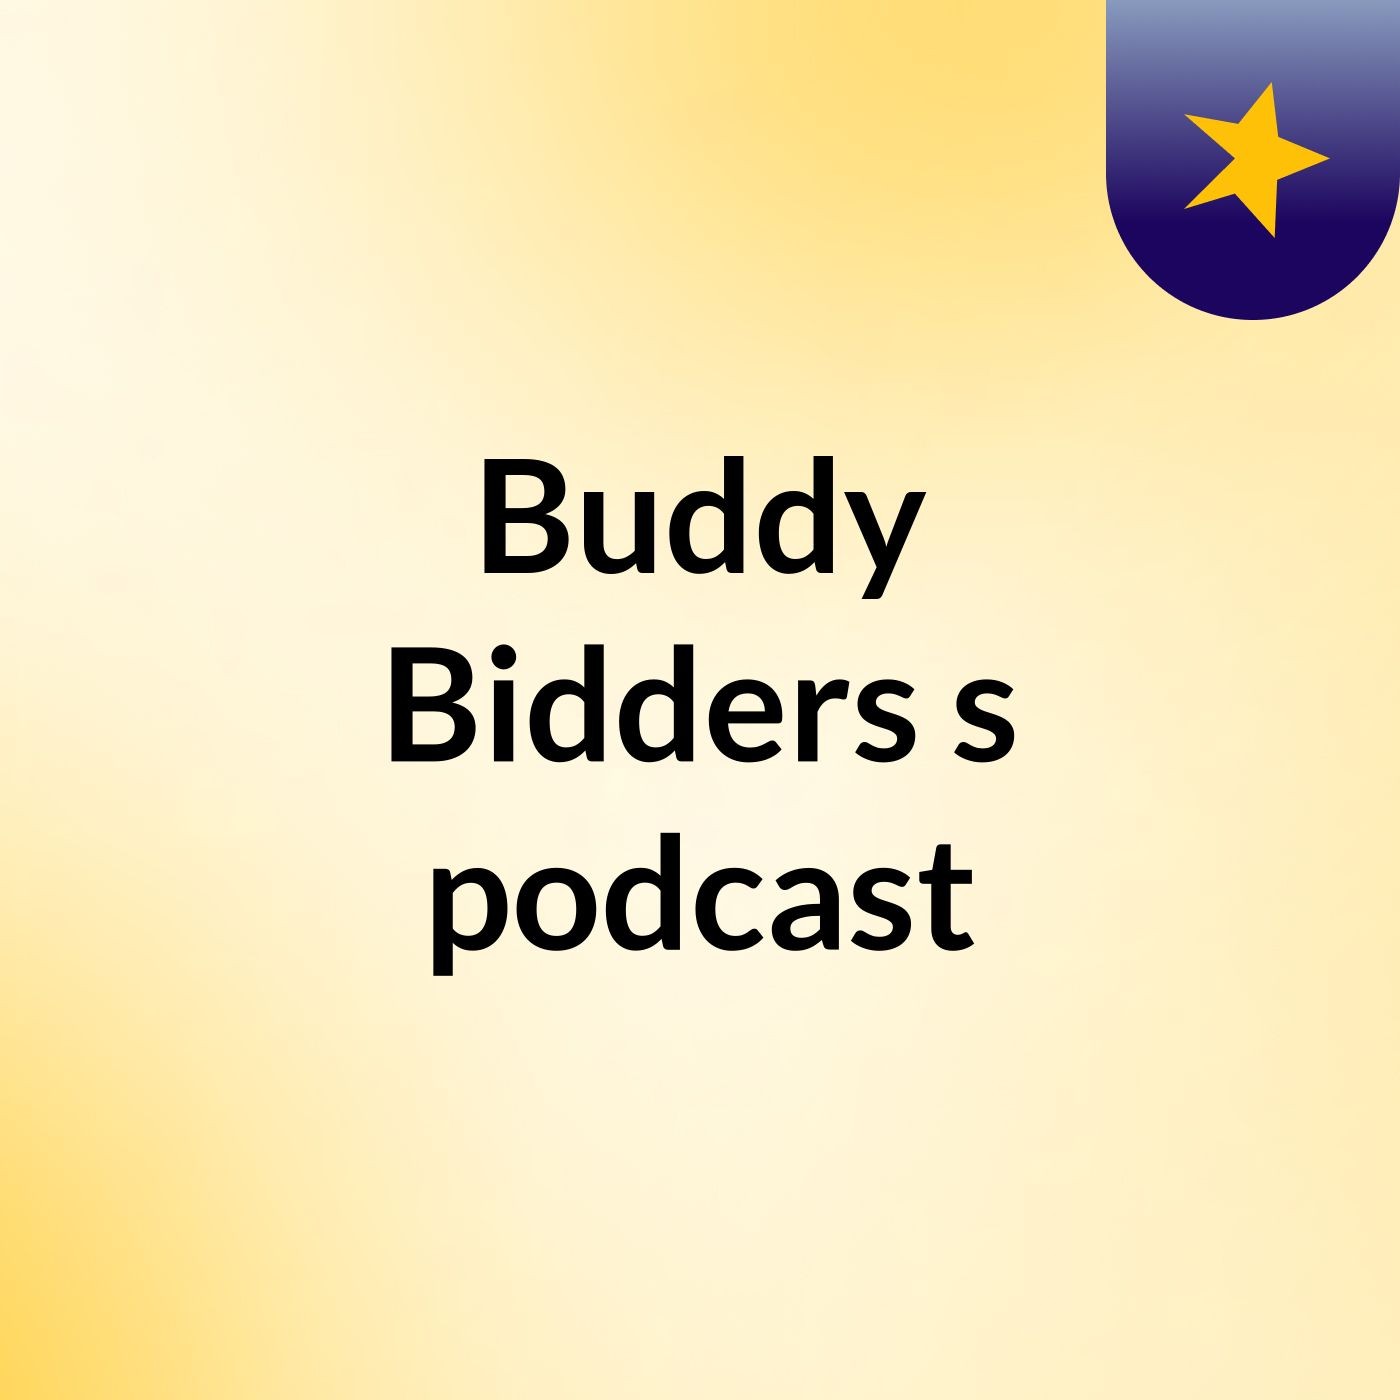 Episode 5 - Buddy Bidders's podcast